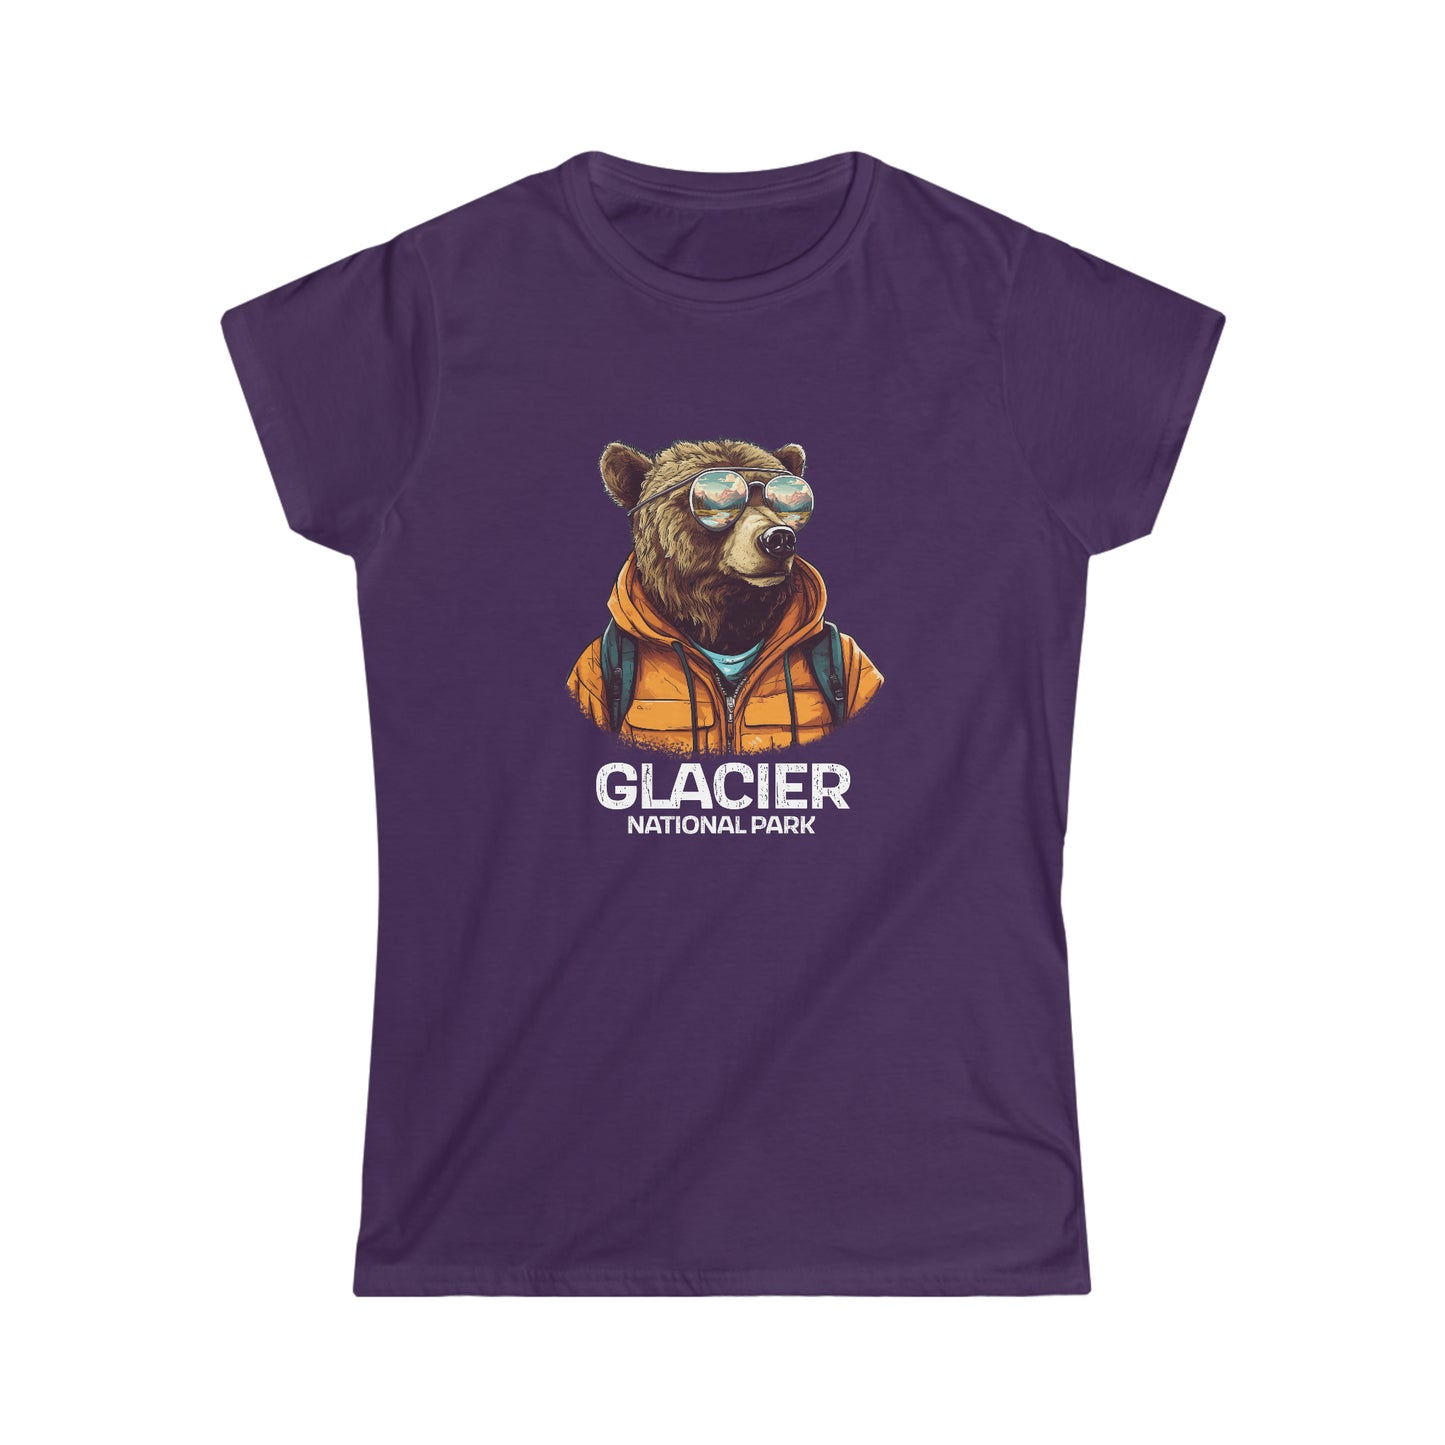 Glacier National Park Women's T-Shirt - Cool Grizzly Bear